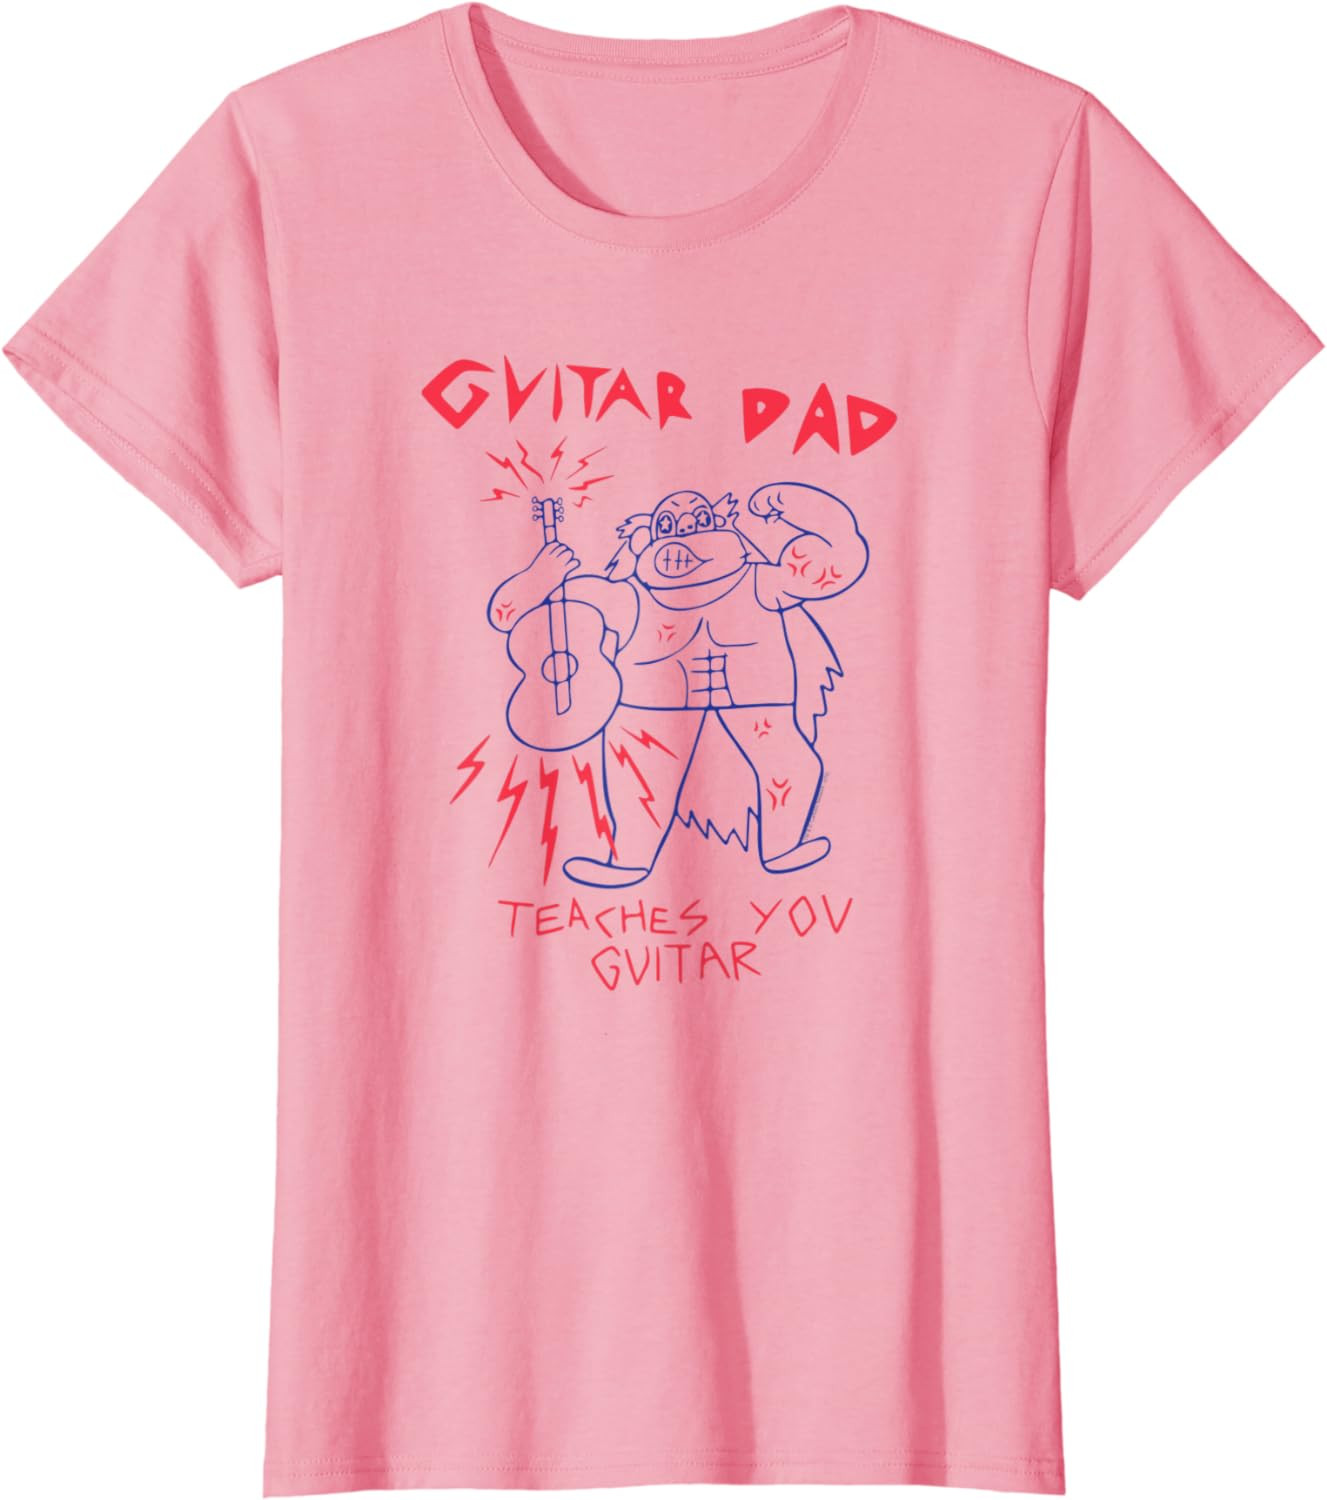 Steven Universe Guitar Dad T-Shirt